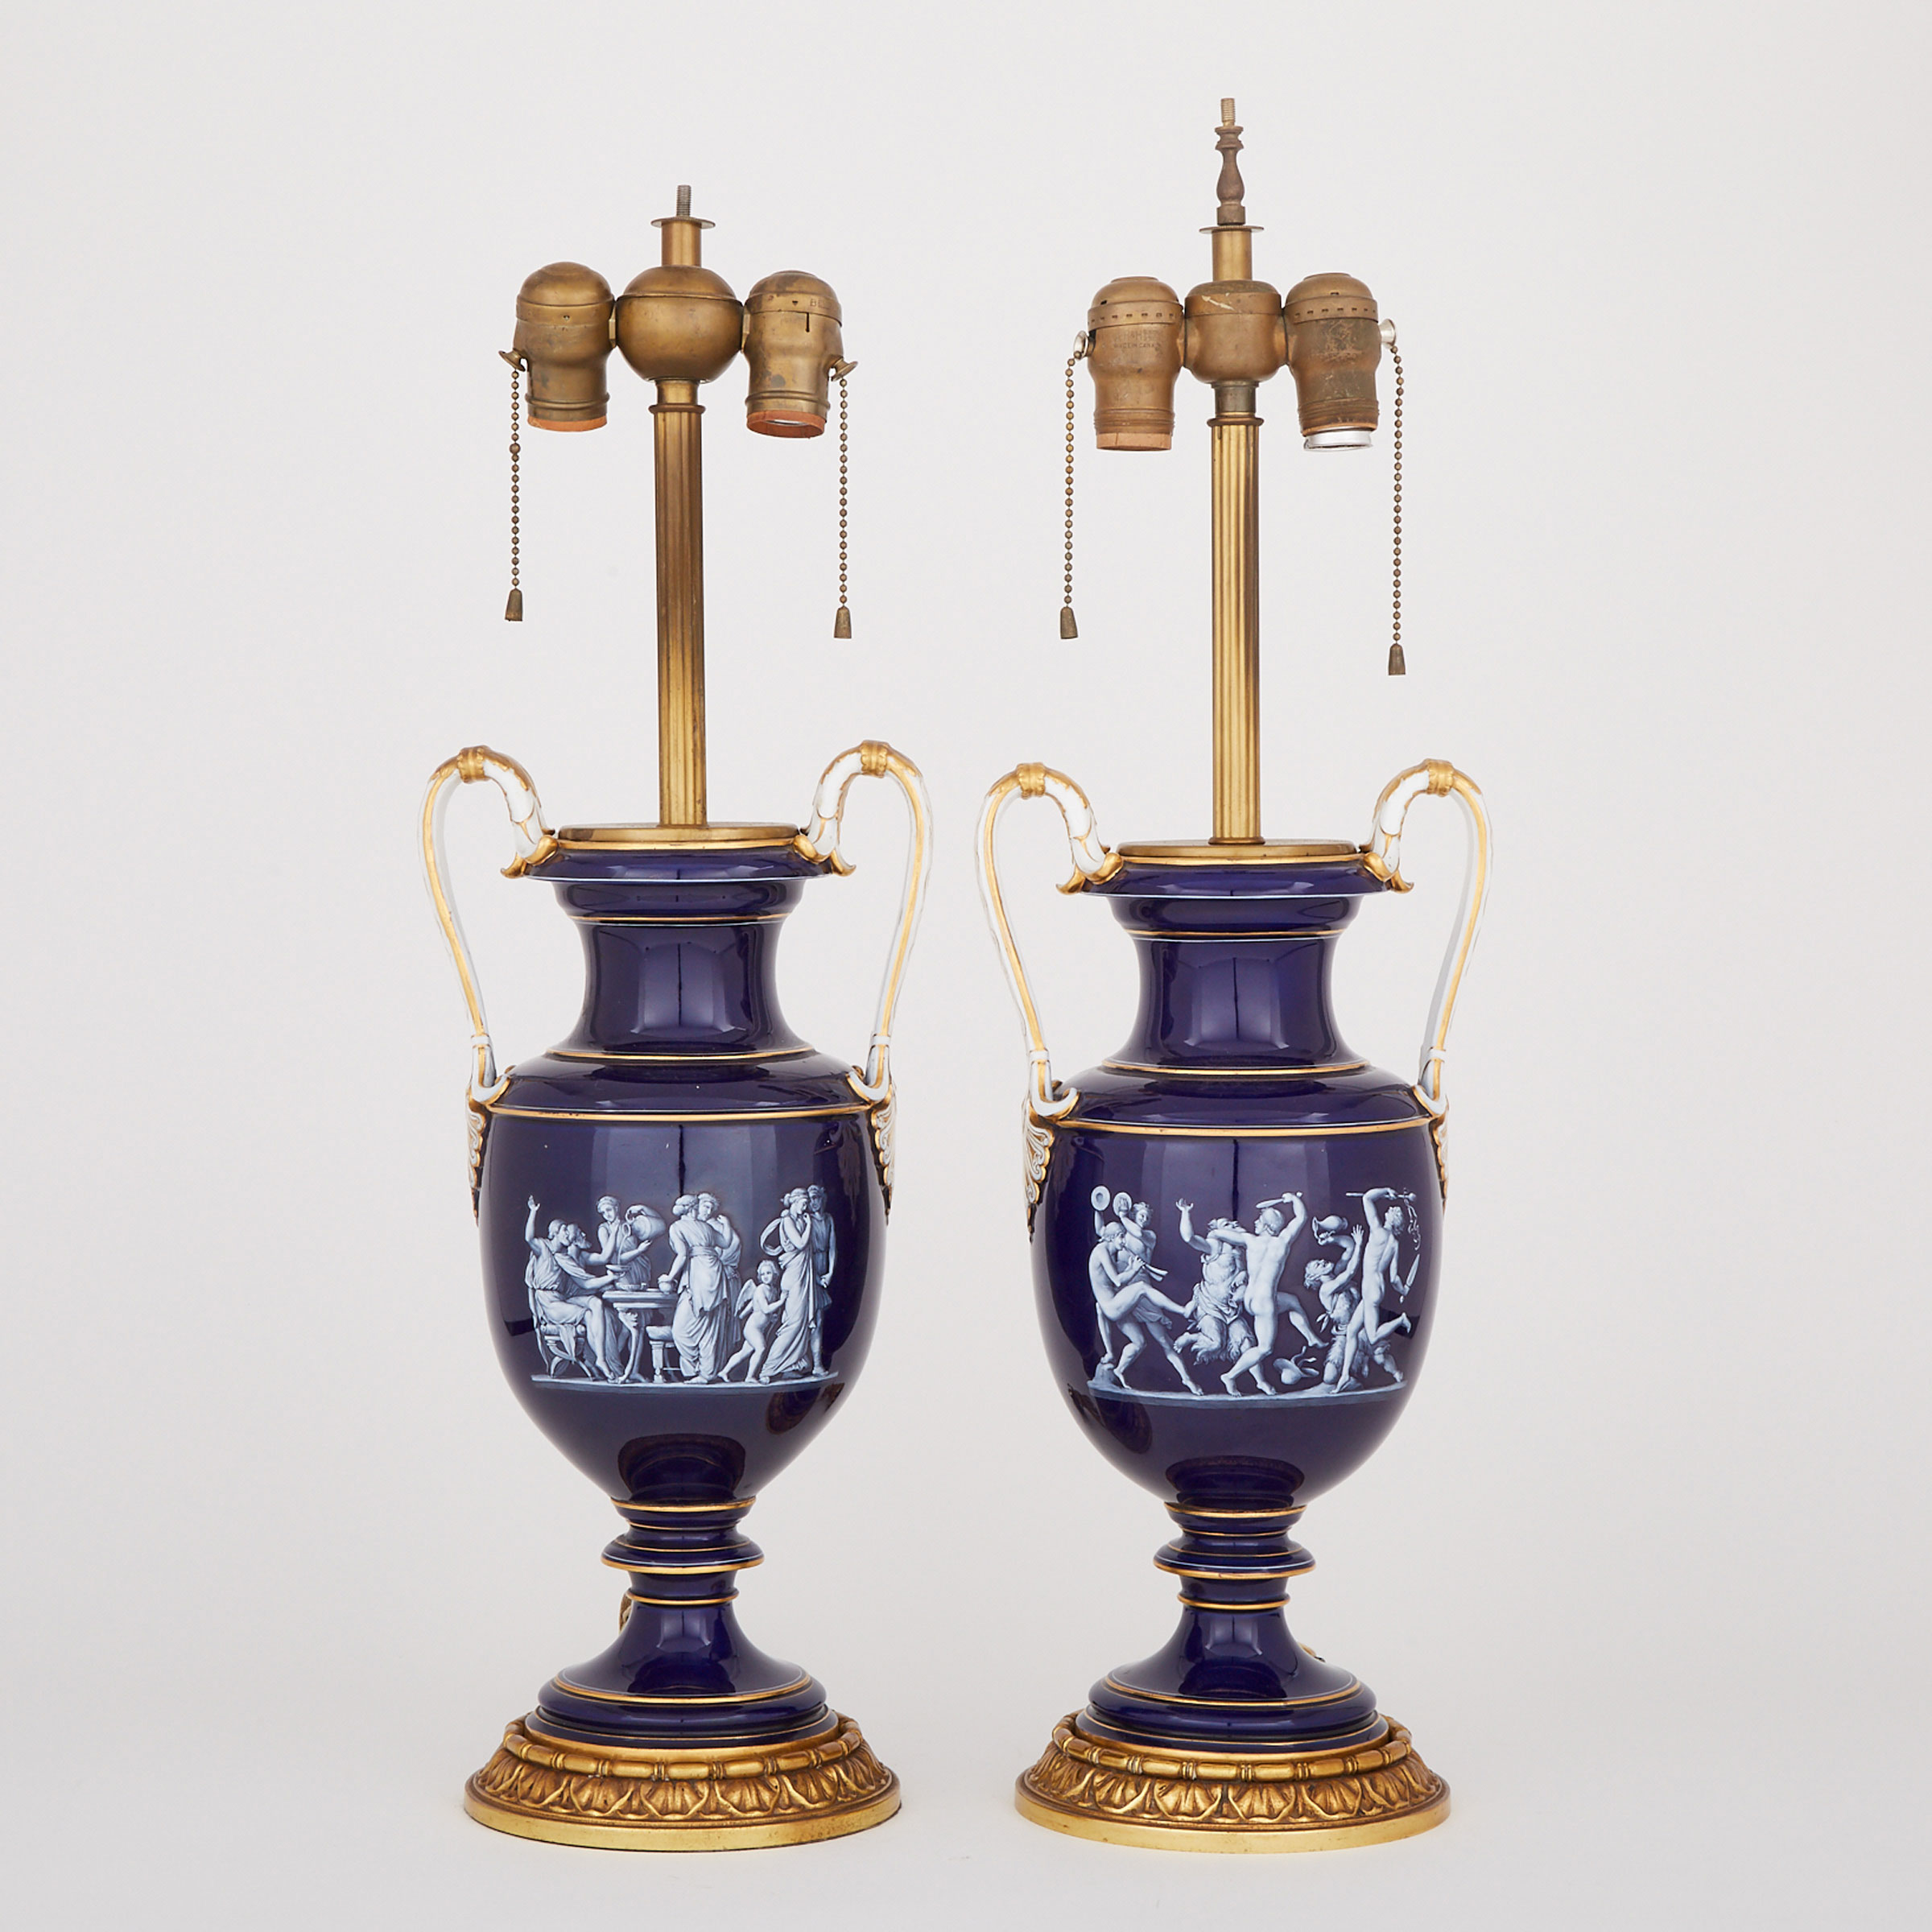 Pair of Meissen Pâte-sur-Pâte Blue Ground Two-Handled Vase-Form Table Lamps, late 19th century